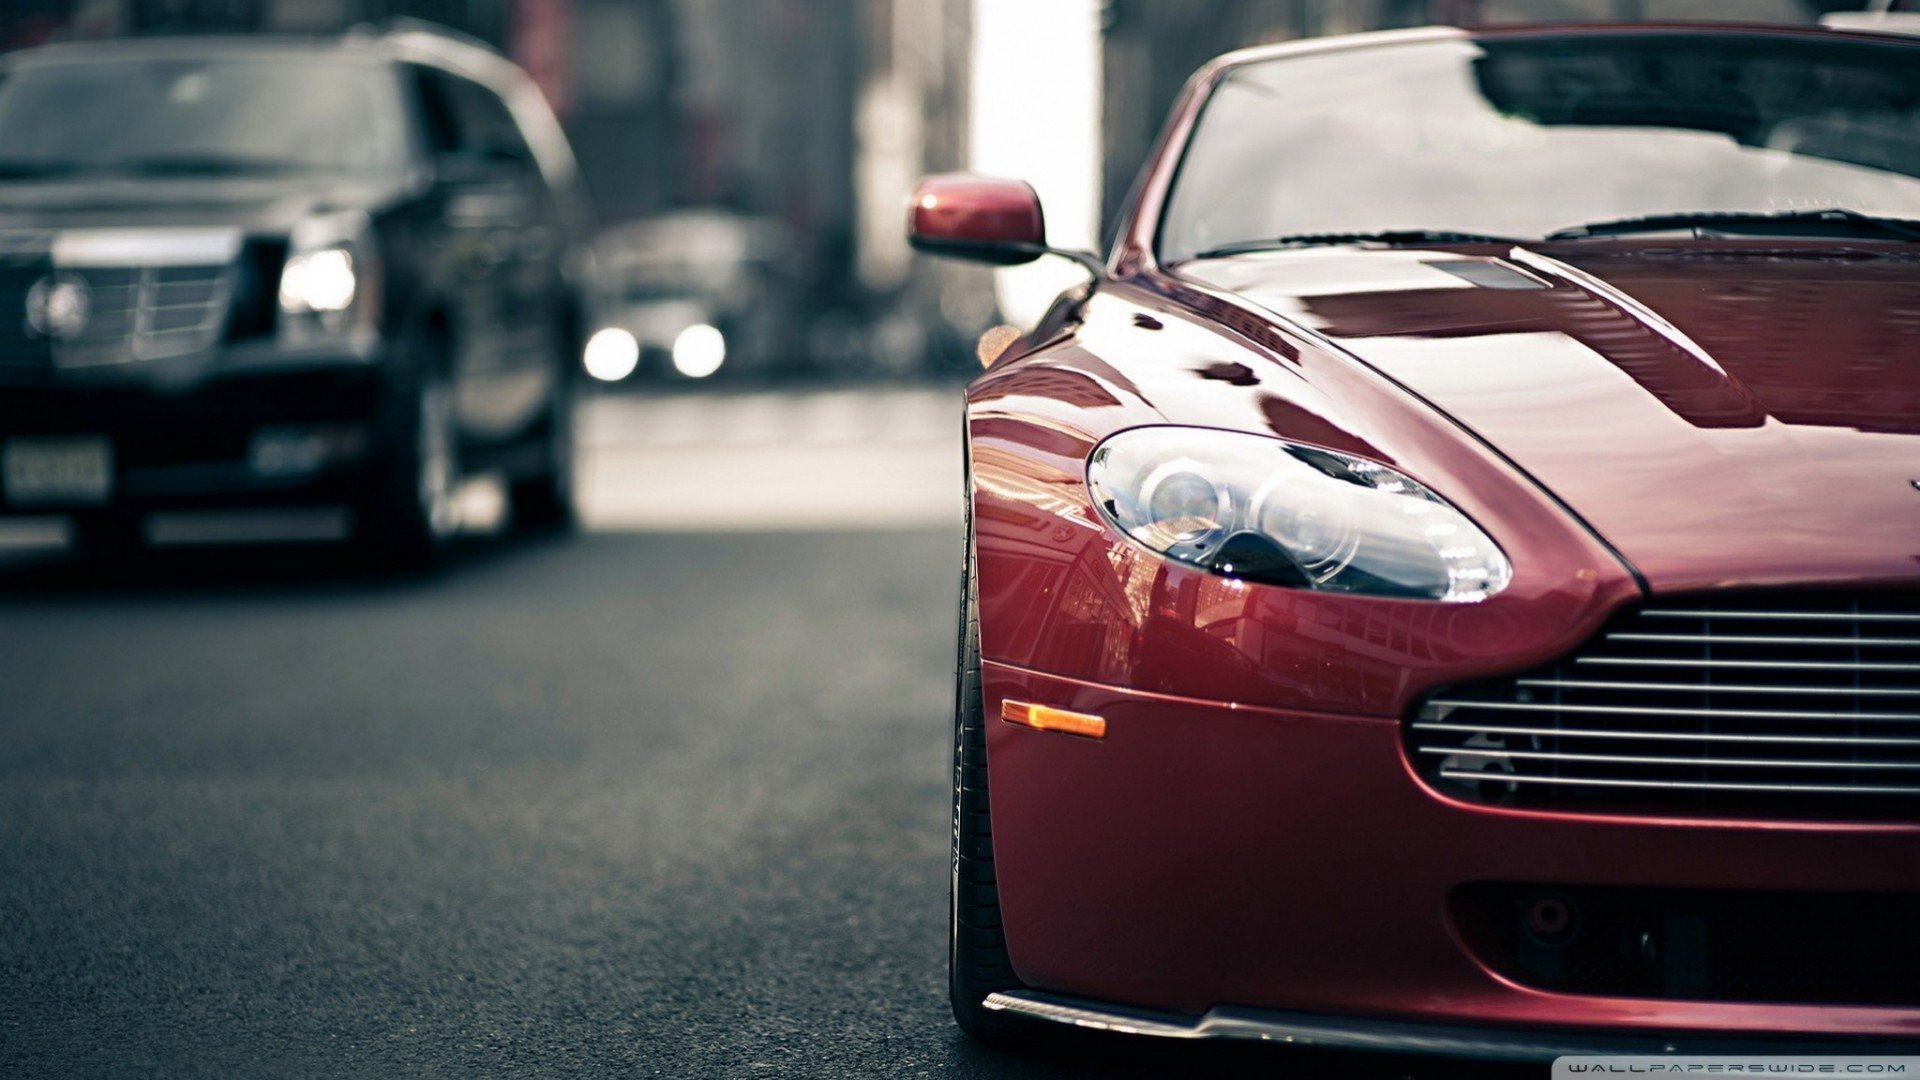 Сайт про автомобили. Aston Martin. Aston Martin DBS v8. Машина на красивом фоне.